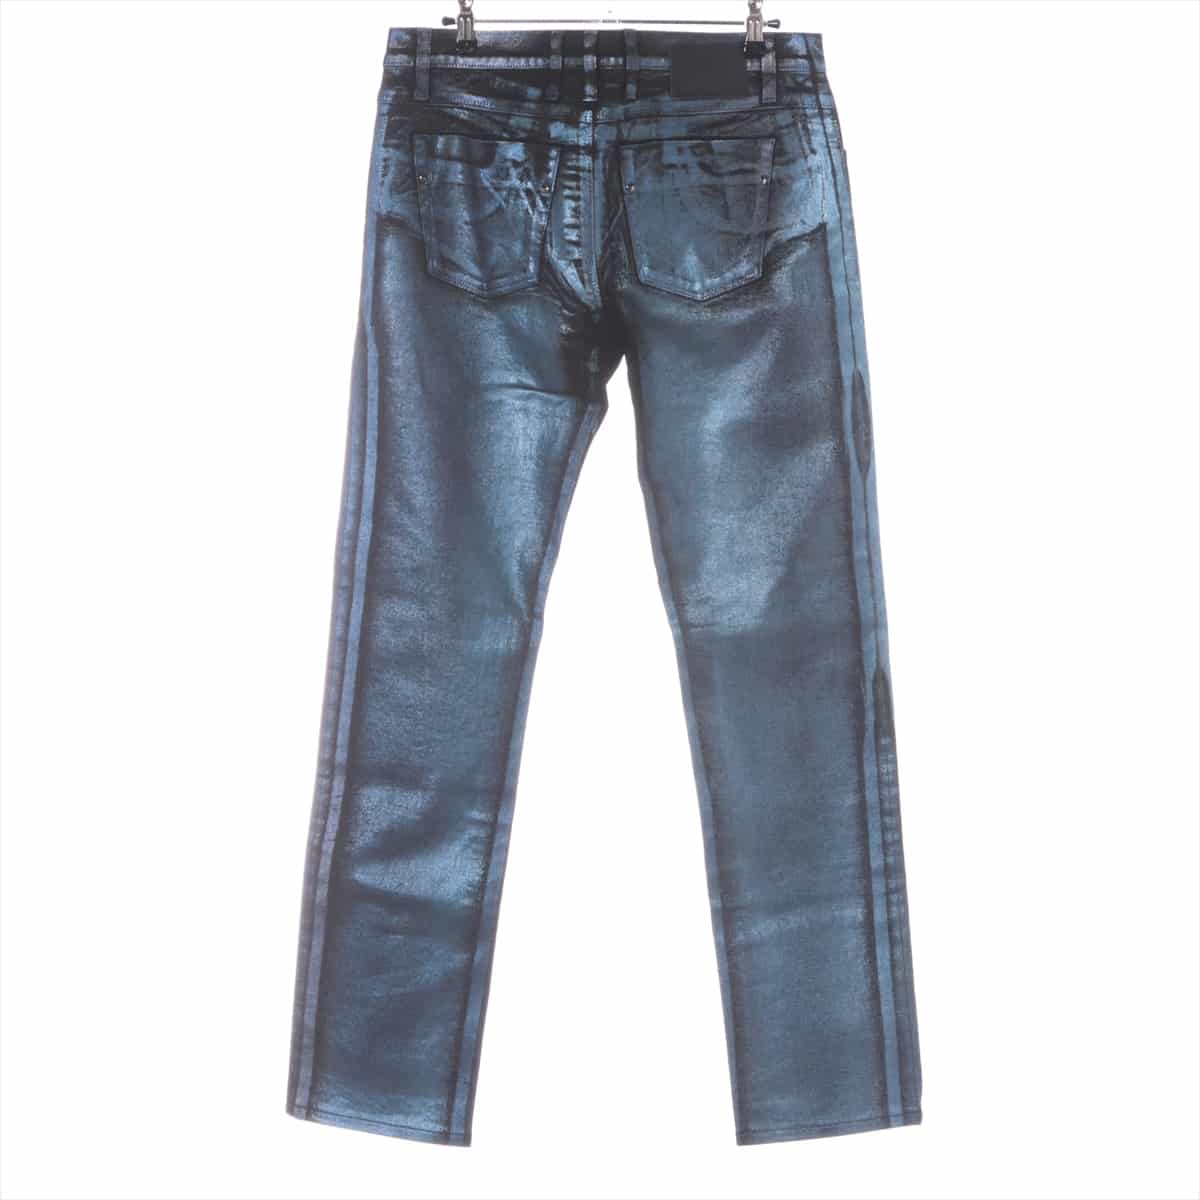 Gucci 09 Cotton & polyurethane Denim pants 46 Men's Blue x black  217499 glitter coating